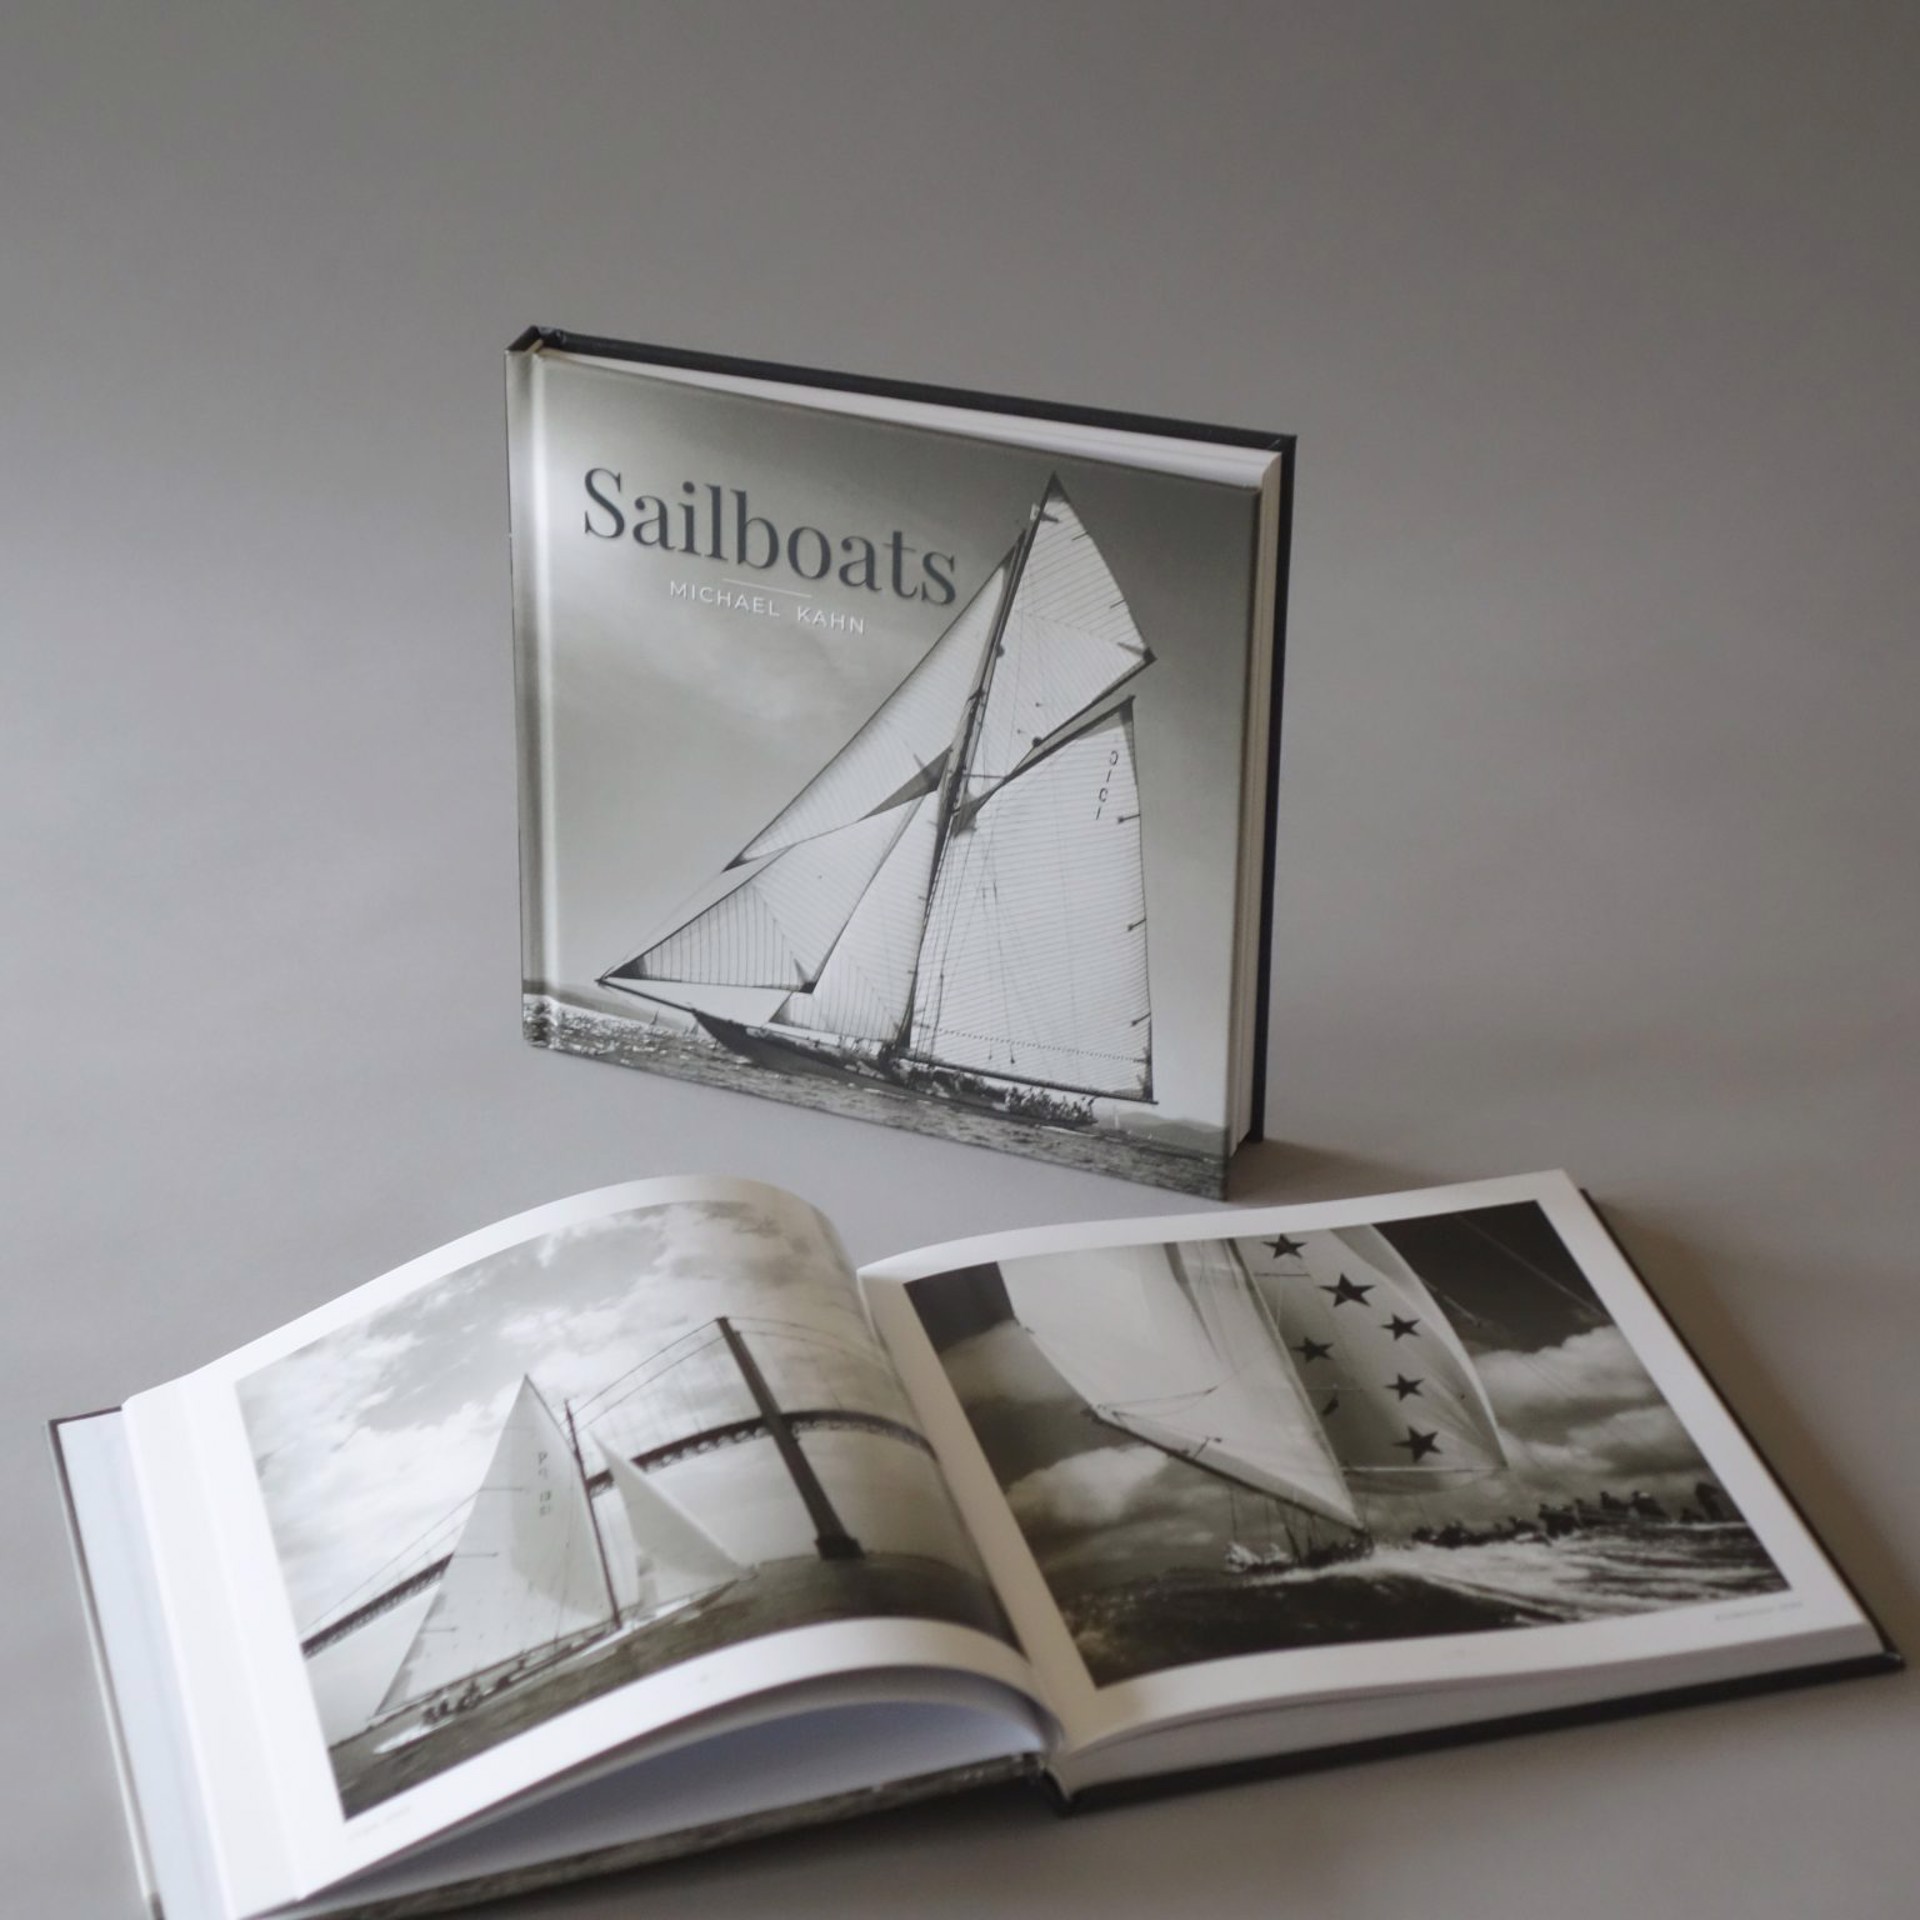 Sailboats by Michael Kahn